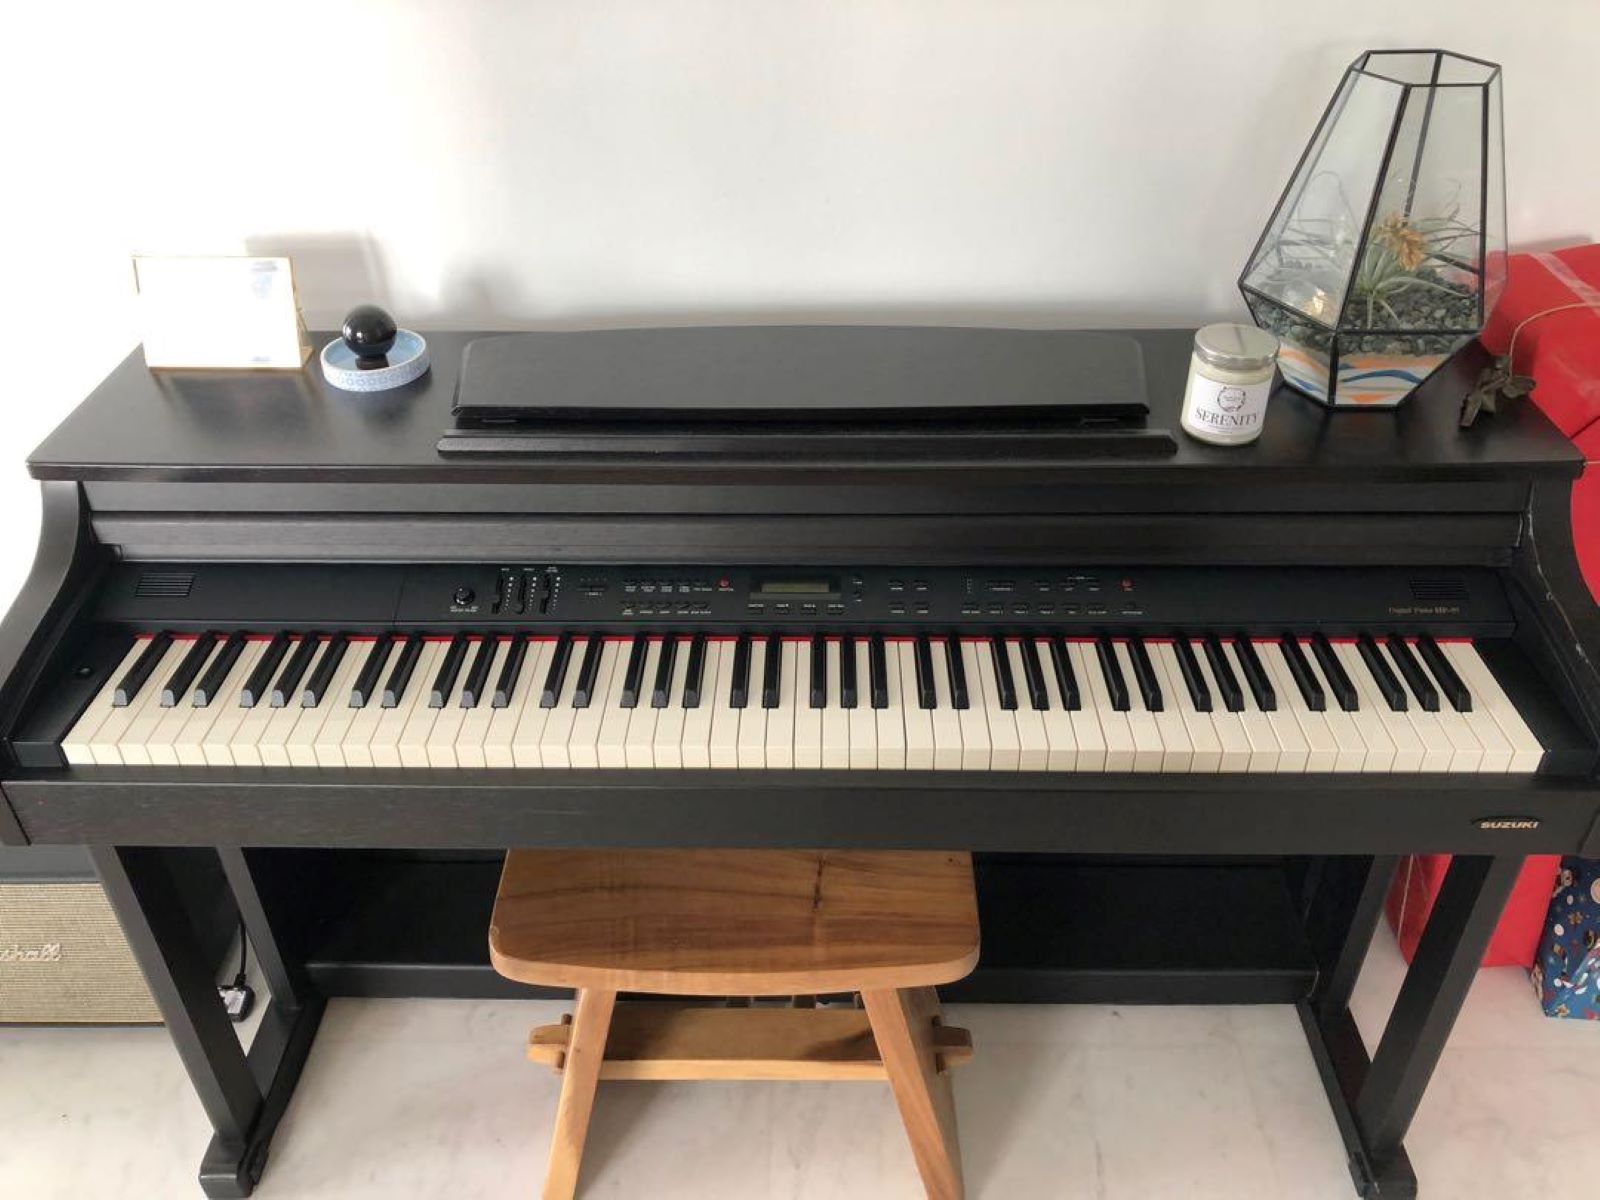 Suzuki HG-415 HP 97 Digital Piano: How To Record User Songs